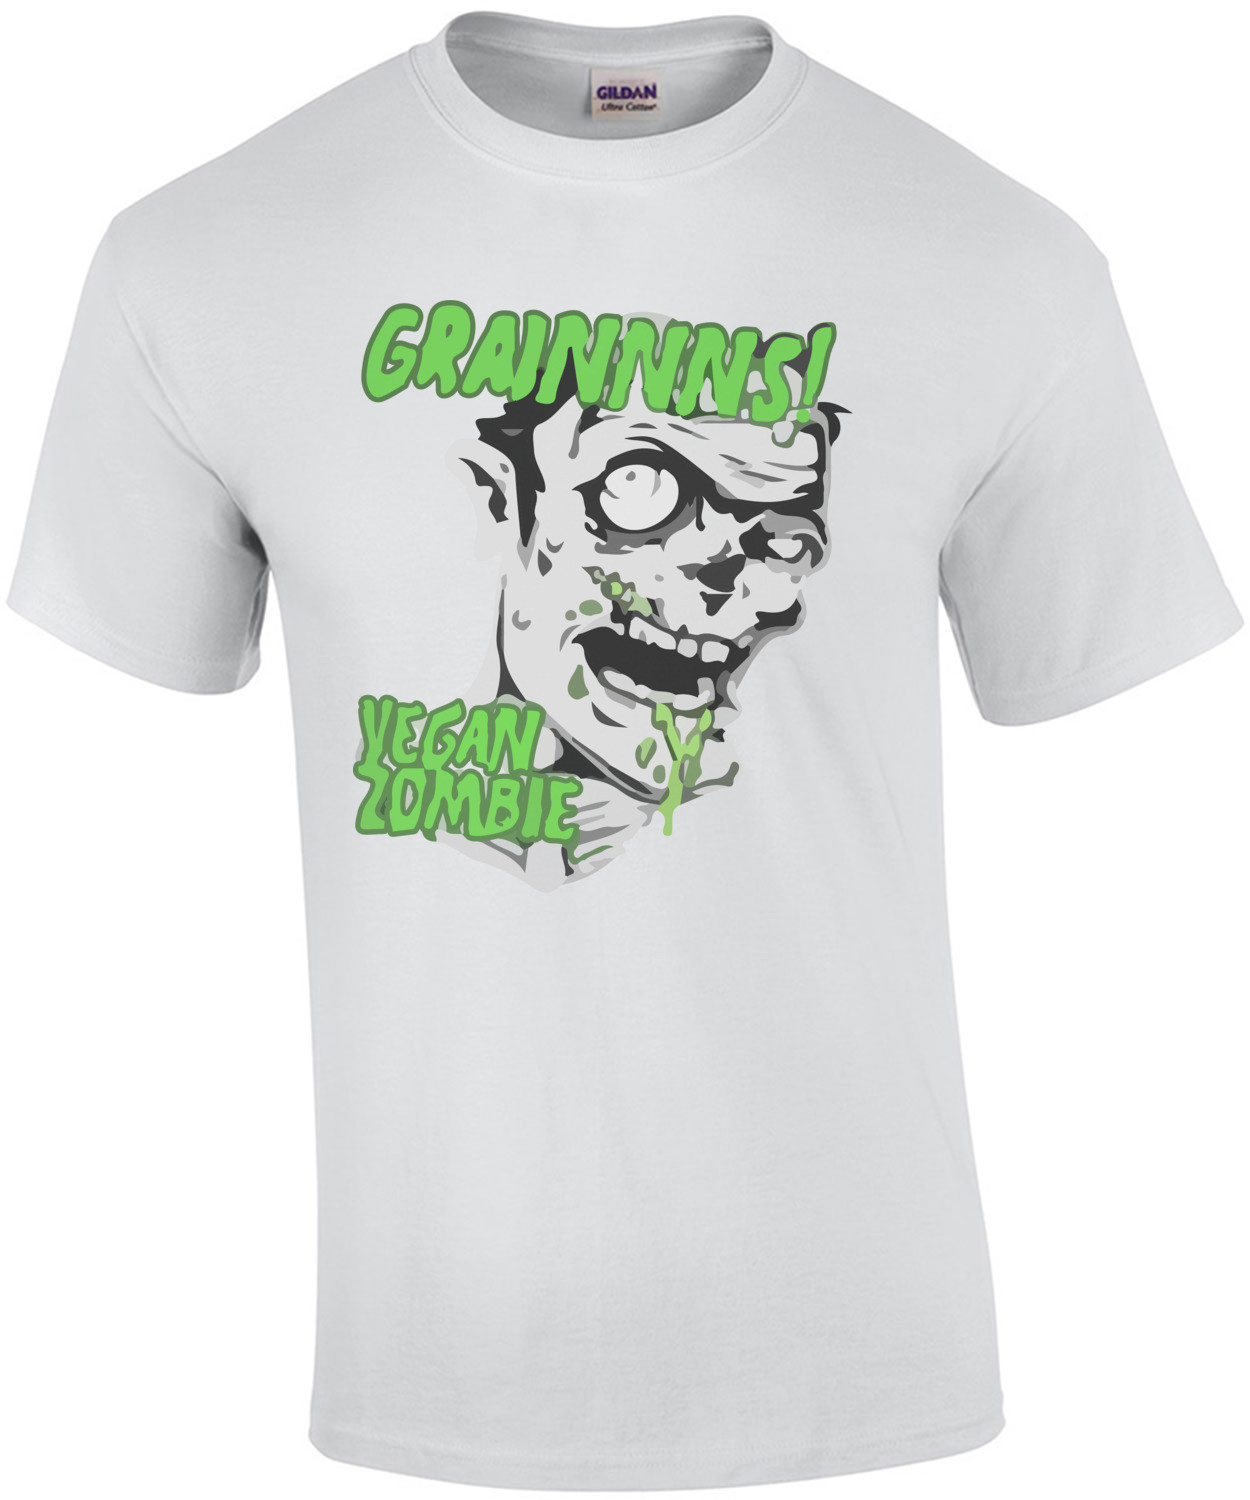 Grainnns! Vegan Zombie - Vegetarian zombie, Funny Zombie T-Shirt